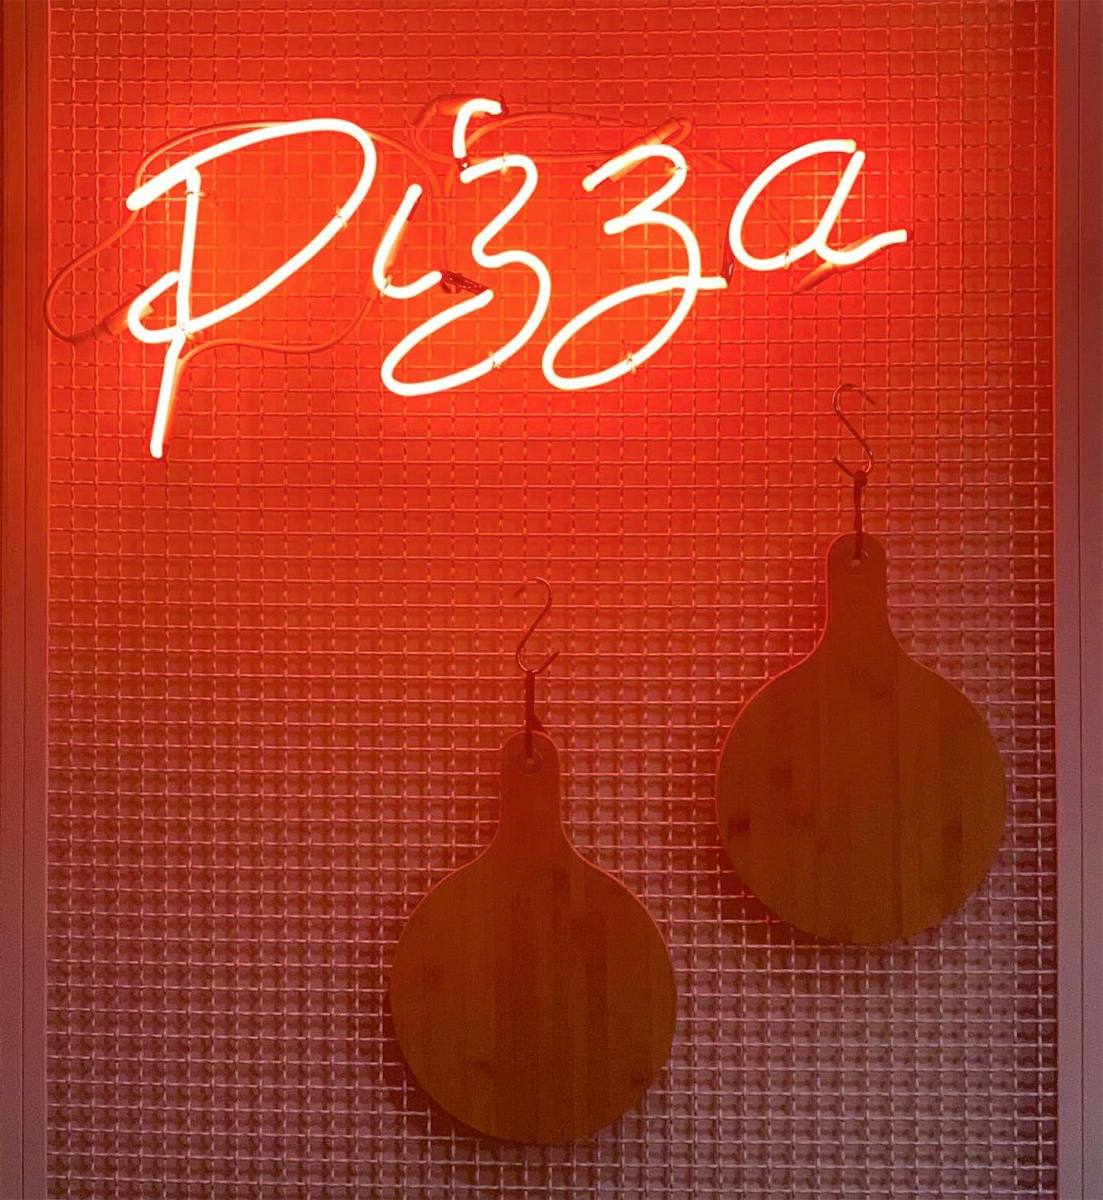 most-iconic-chicago-pizzerias